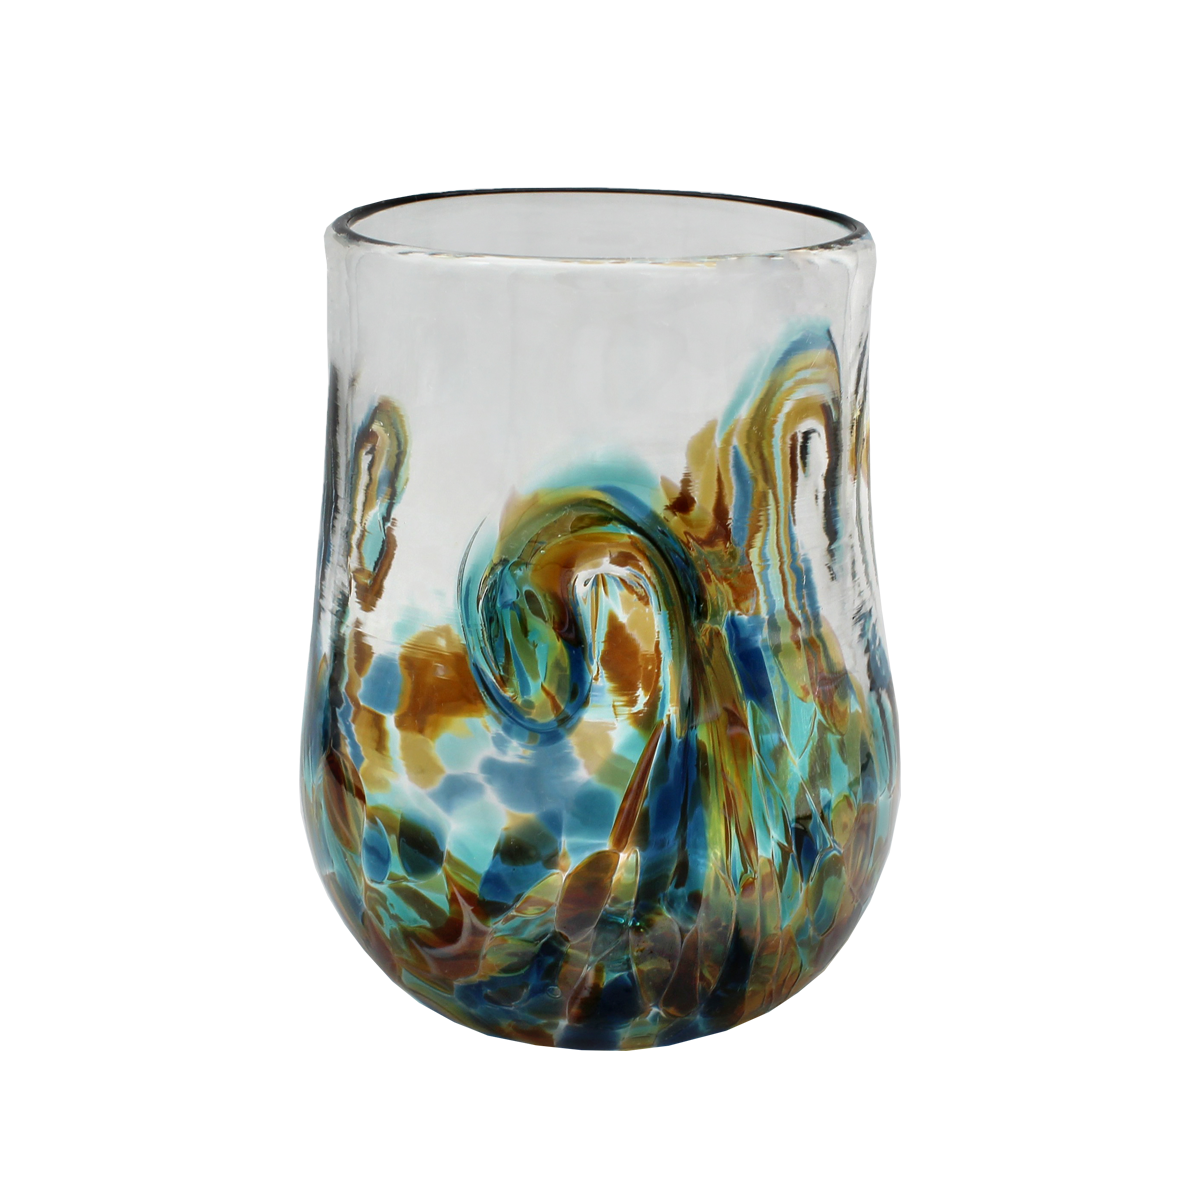 Twisty Cups - Glass Art - Kingston Glass Studio - Blown Glass - Glass Blowing